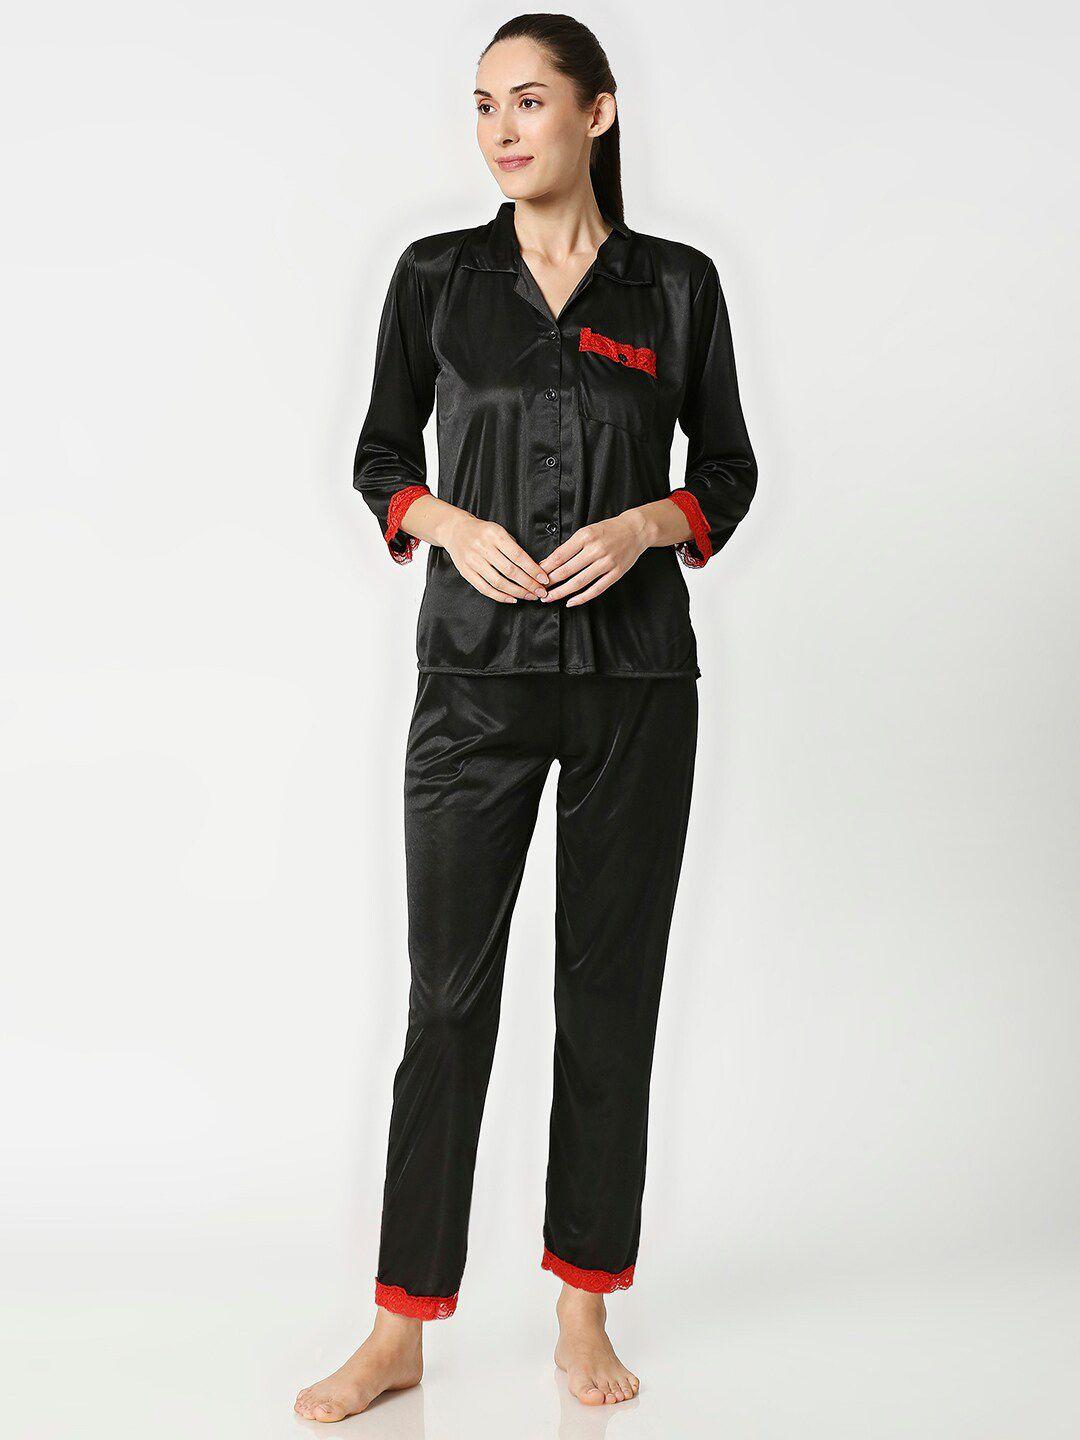 av2-women-black-&-red-solid-night-suit